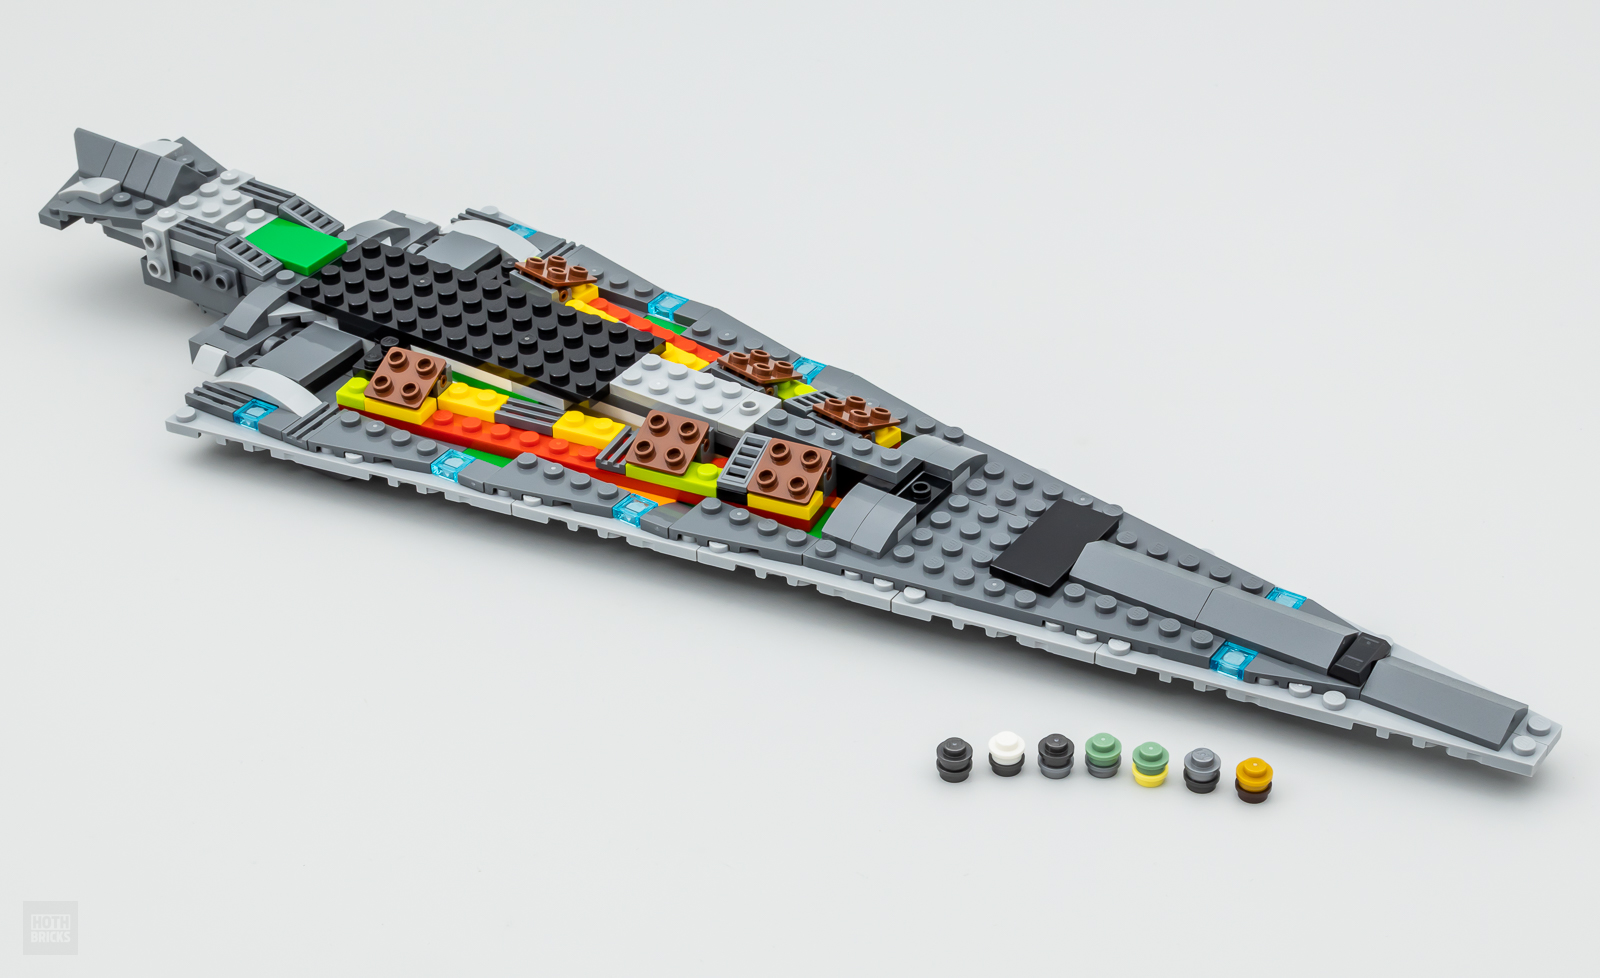 LEGO Star Wars Imperial Star Destroyer annoncé